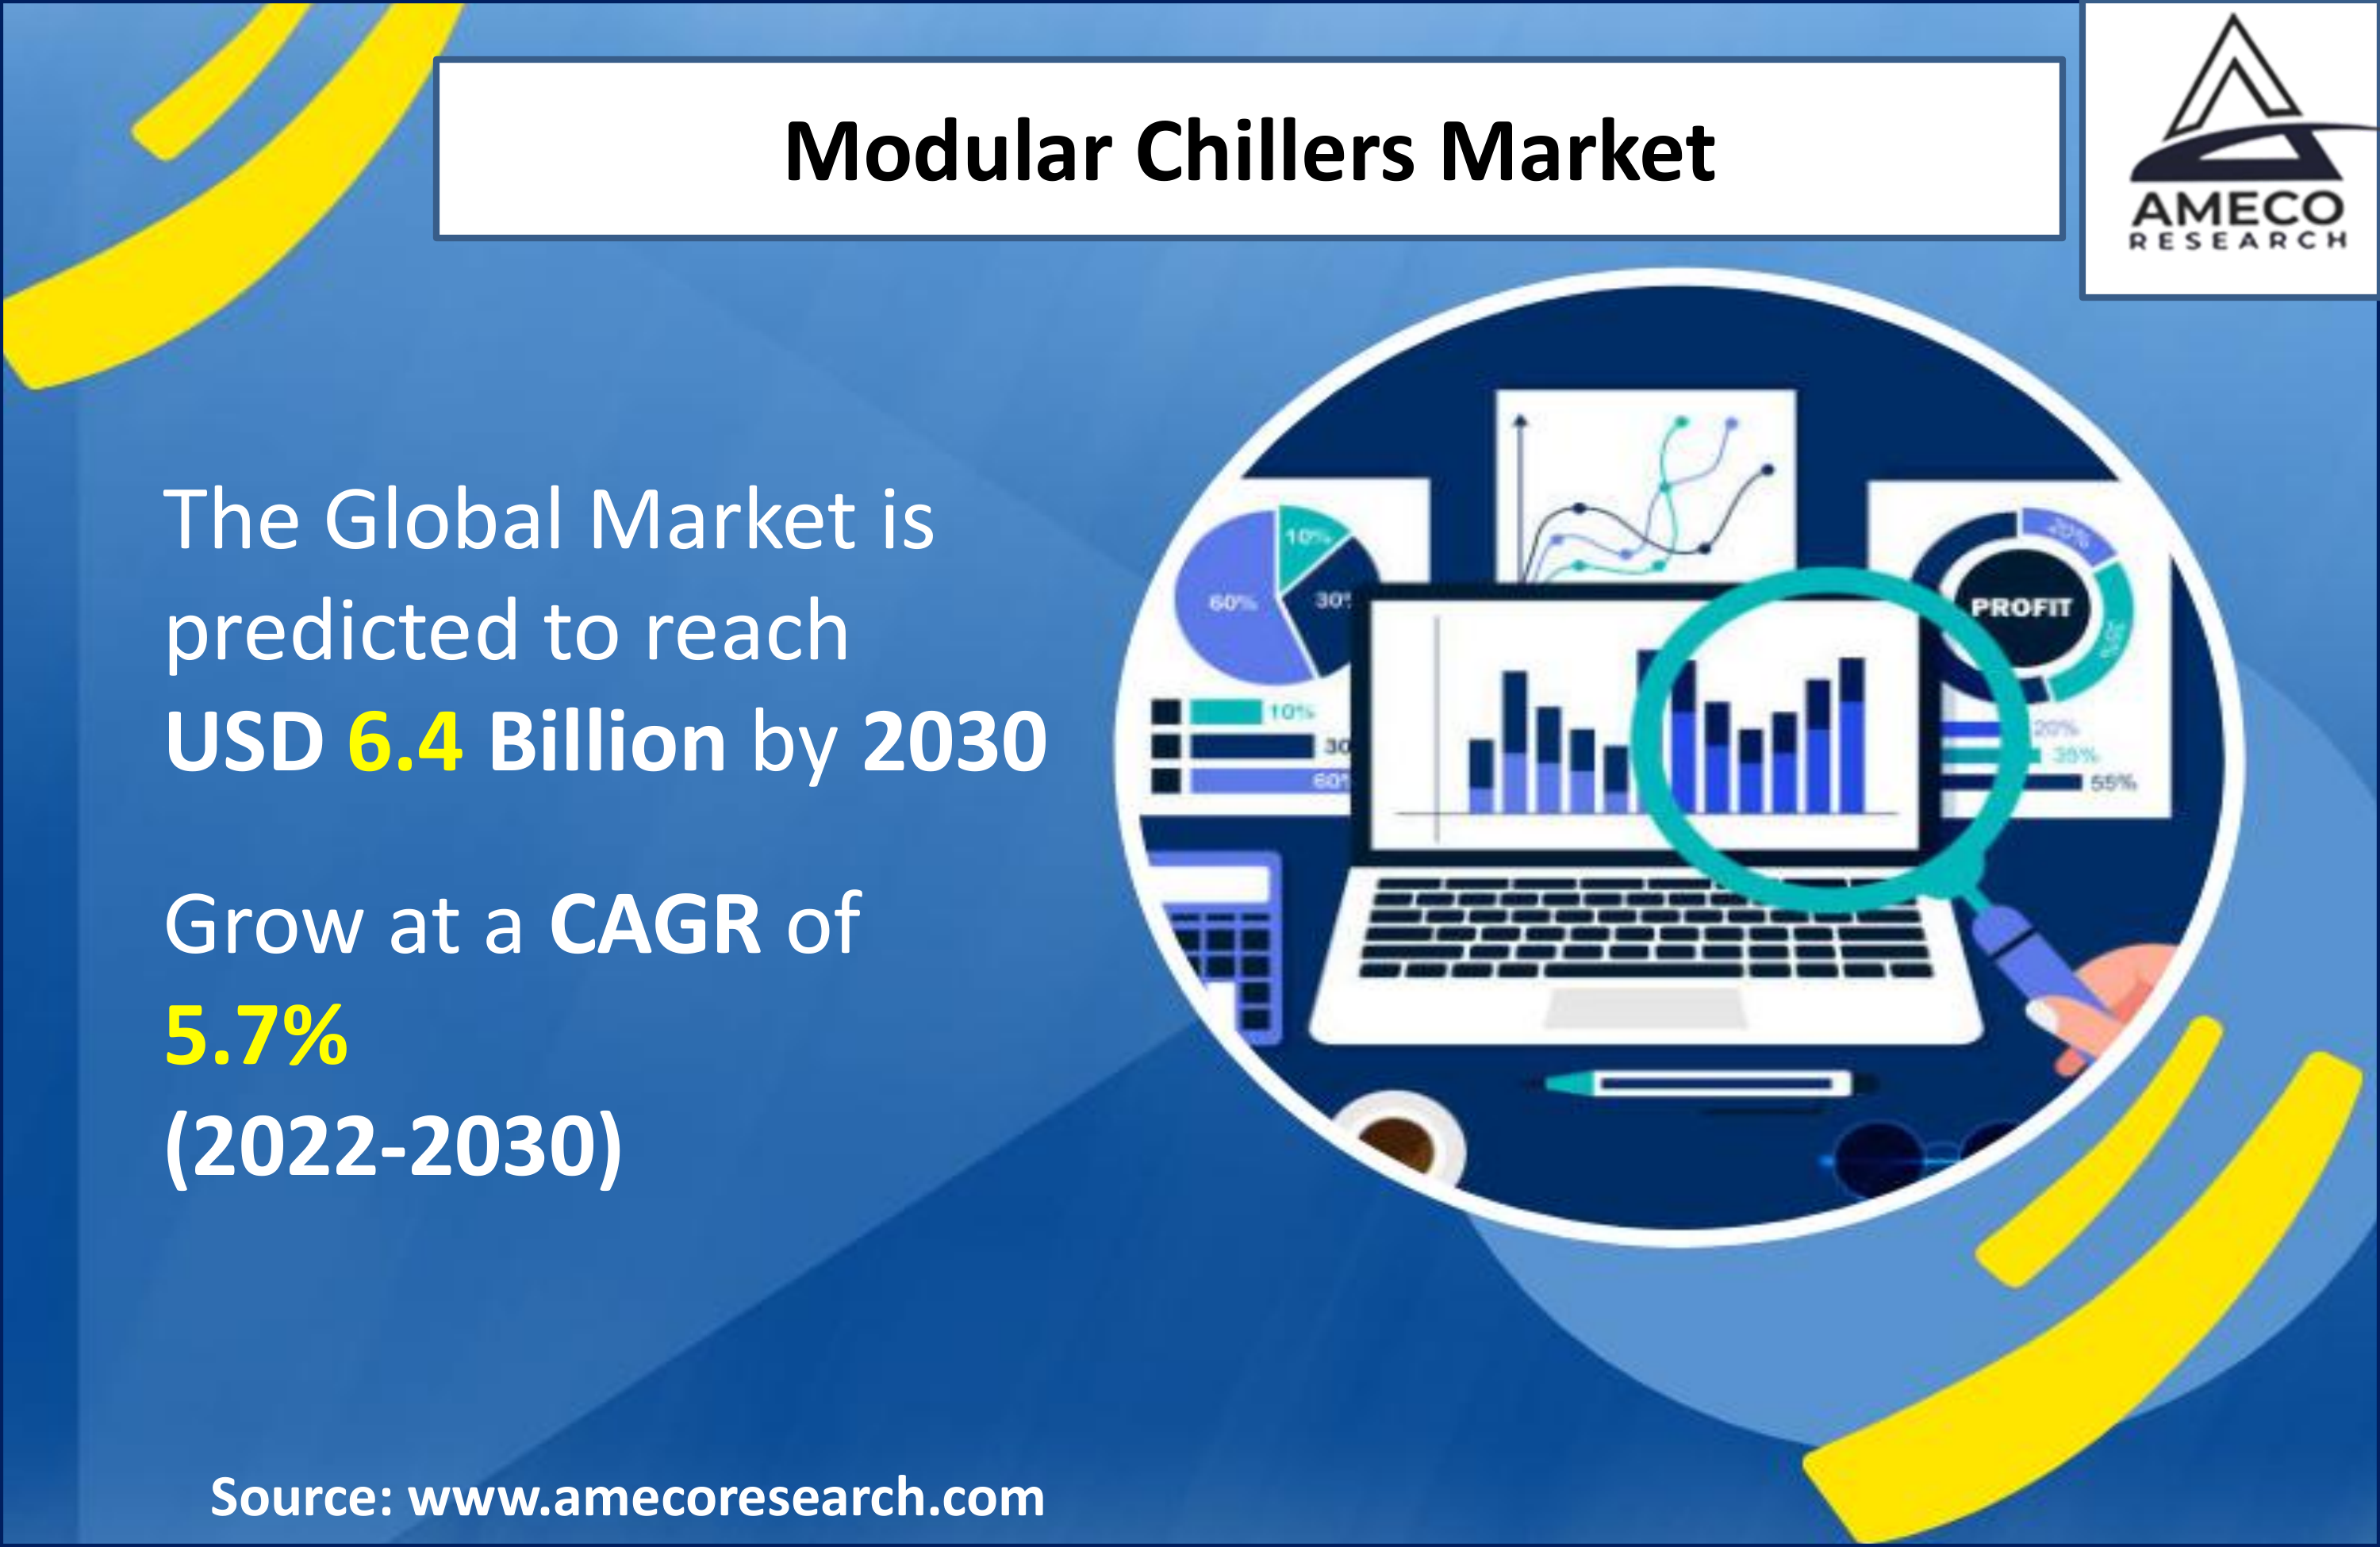 Modular Chillers Market